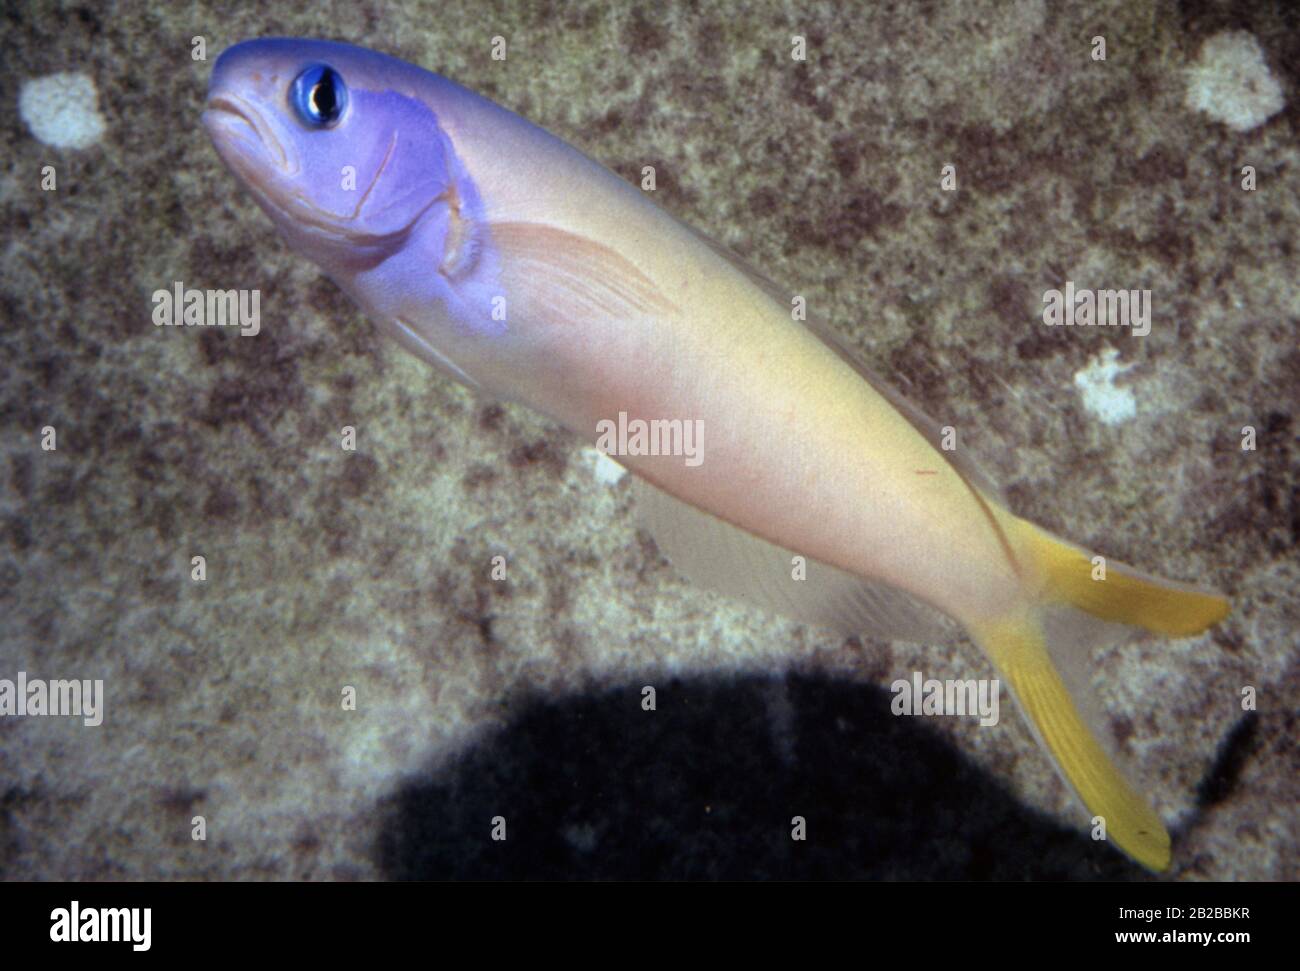 Purple-headed sand tilefish (Hoplolatilus starcki) Stock Photo